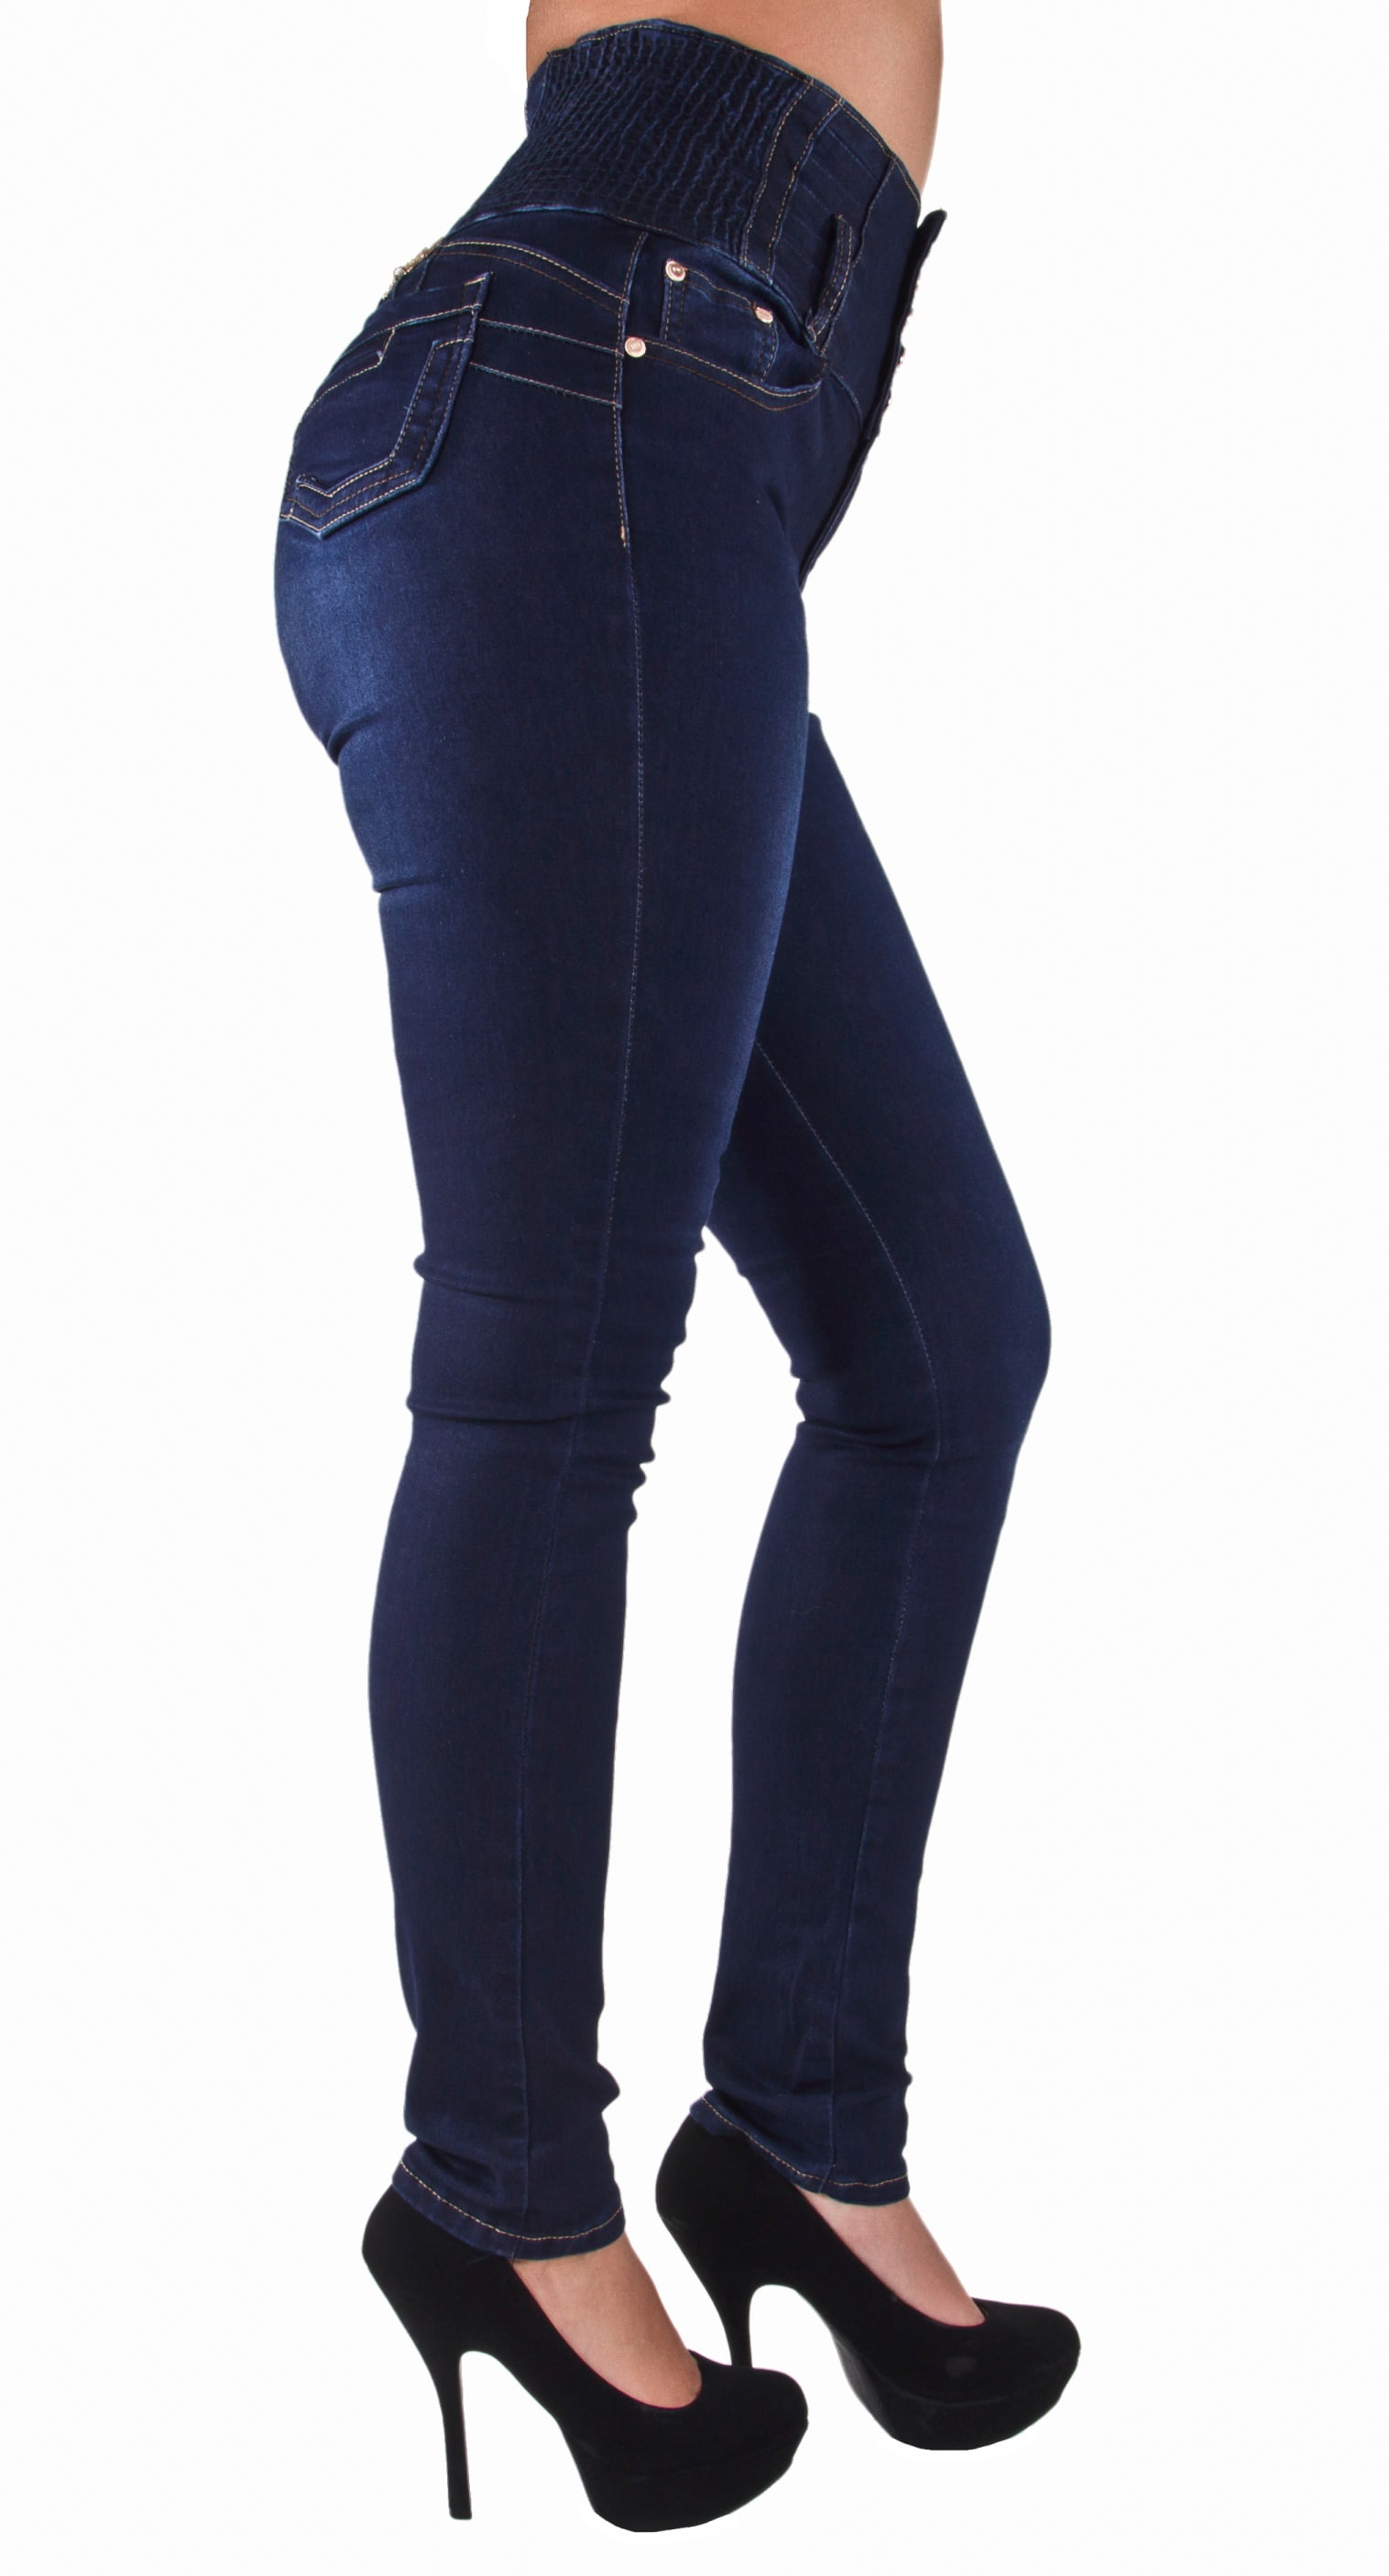 alaa dajani recommends brazilian jeans plus size pic